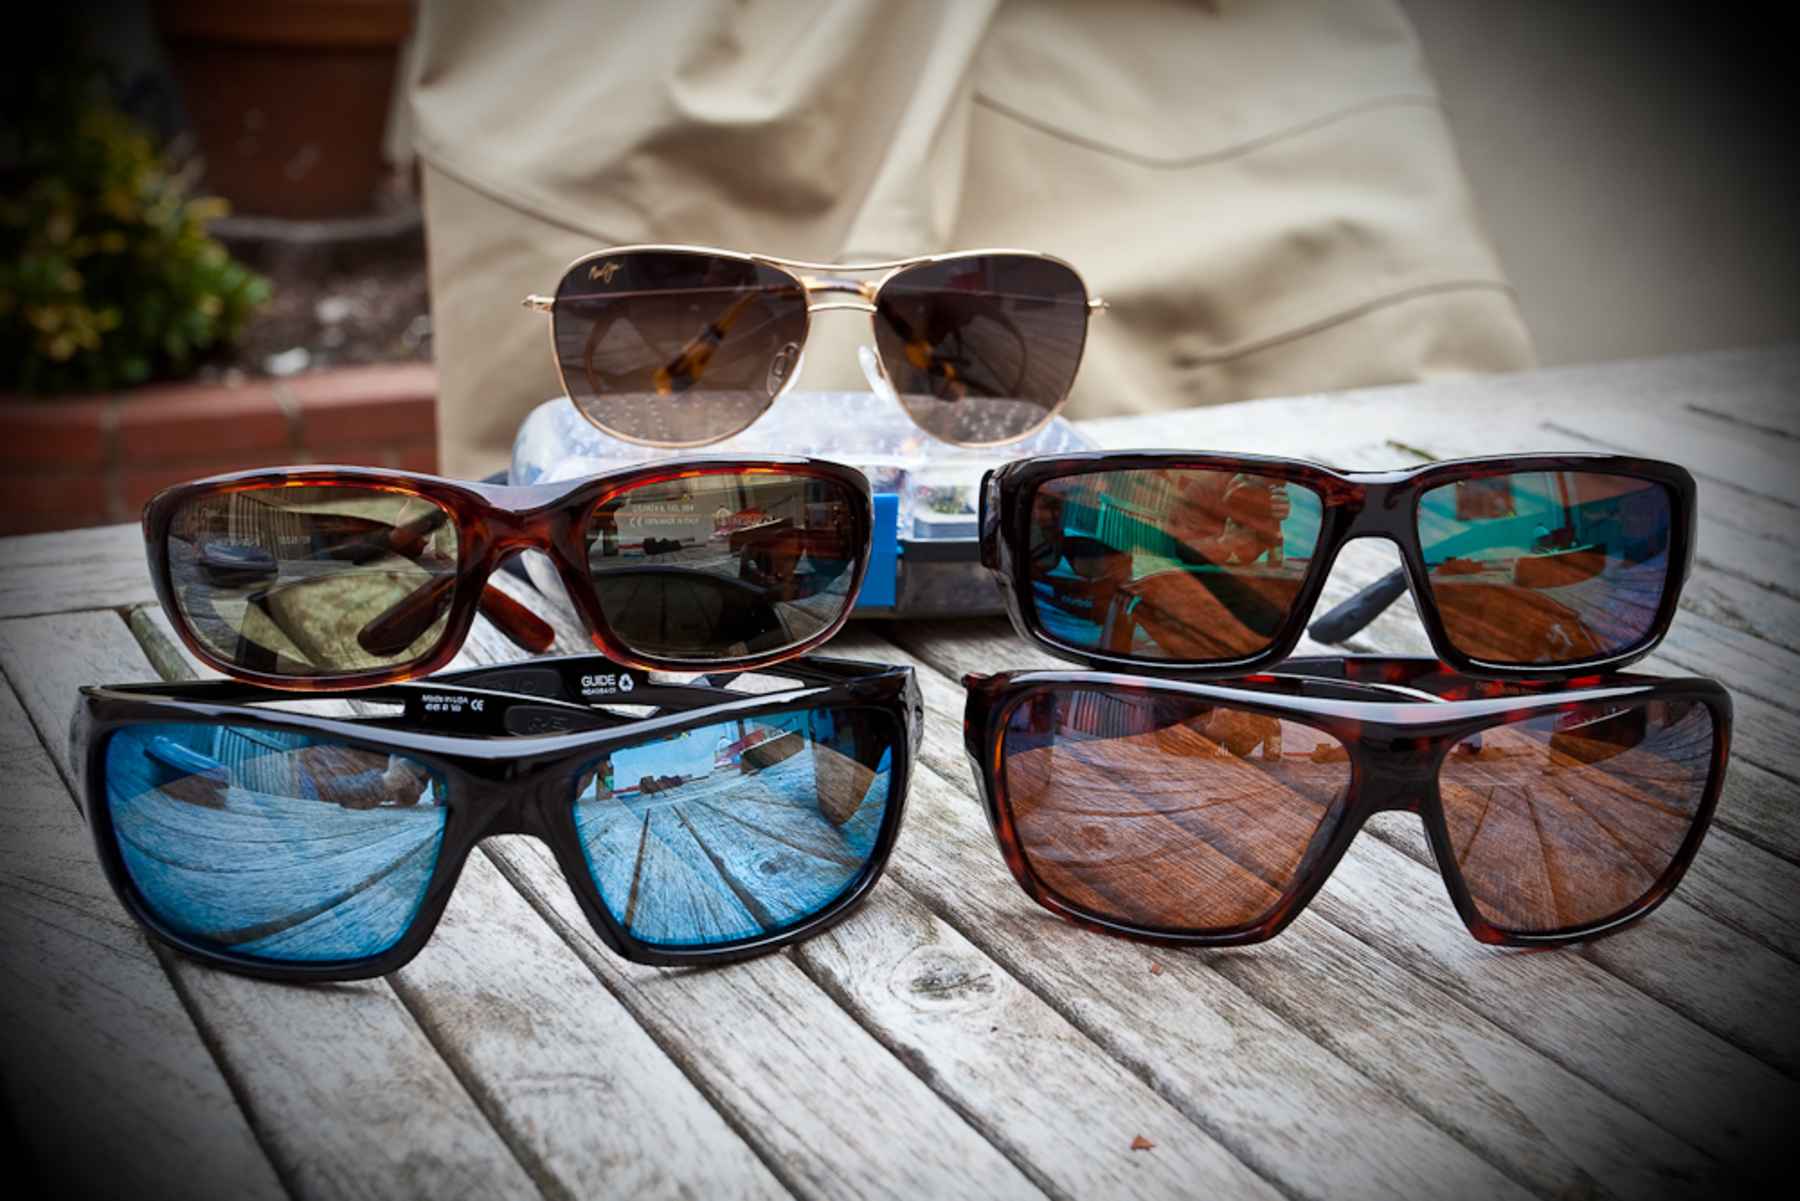 High-Quality, Polarized Carp Fishing Sunglasses